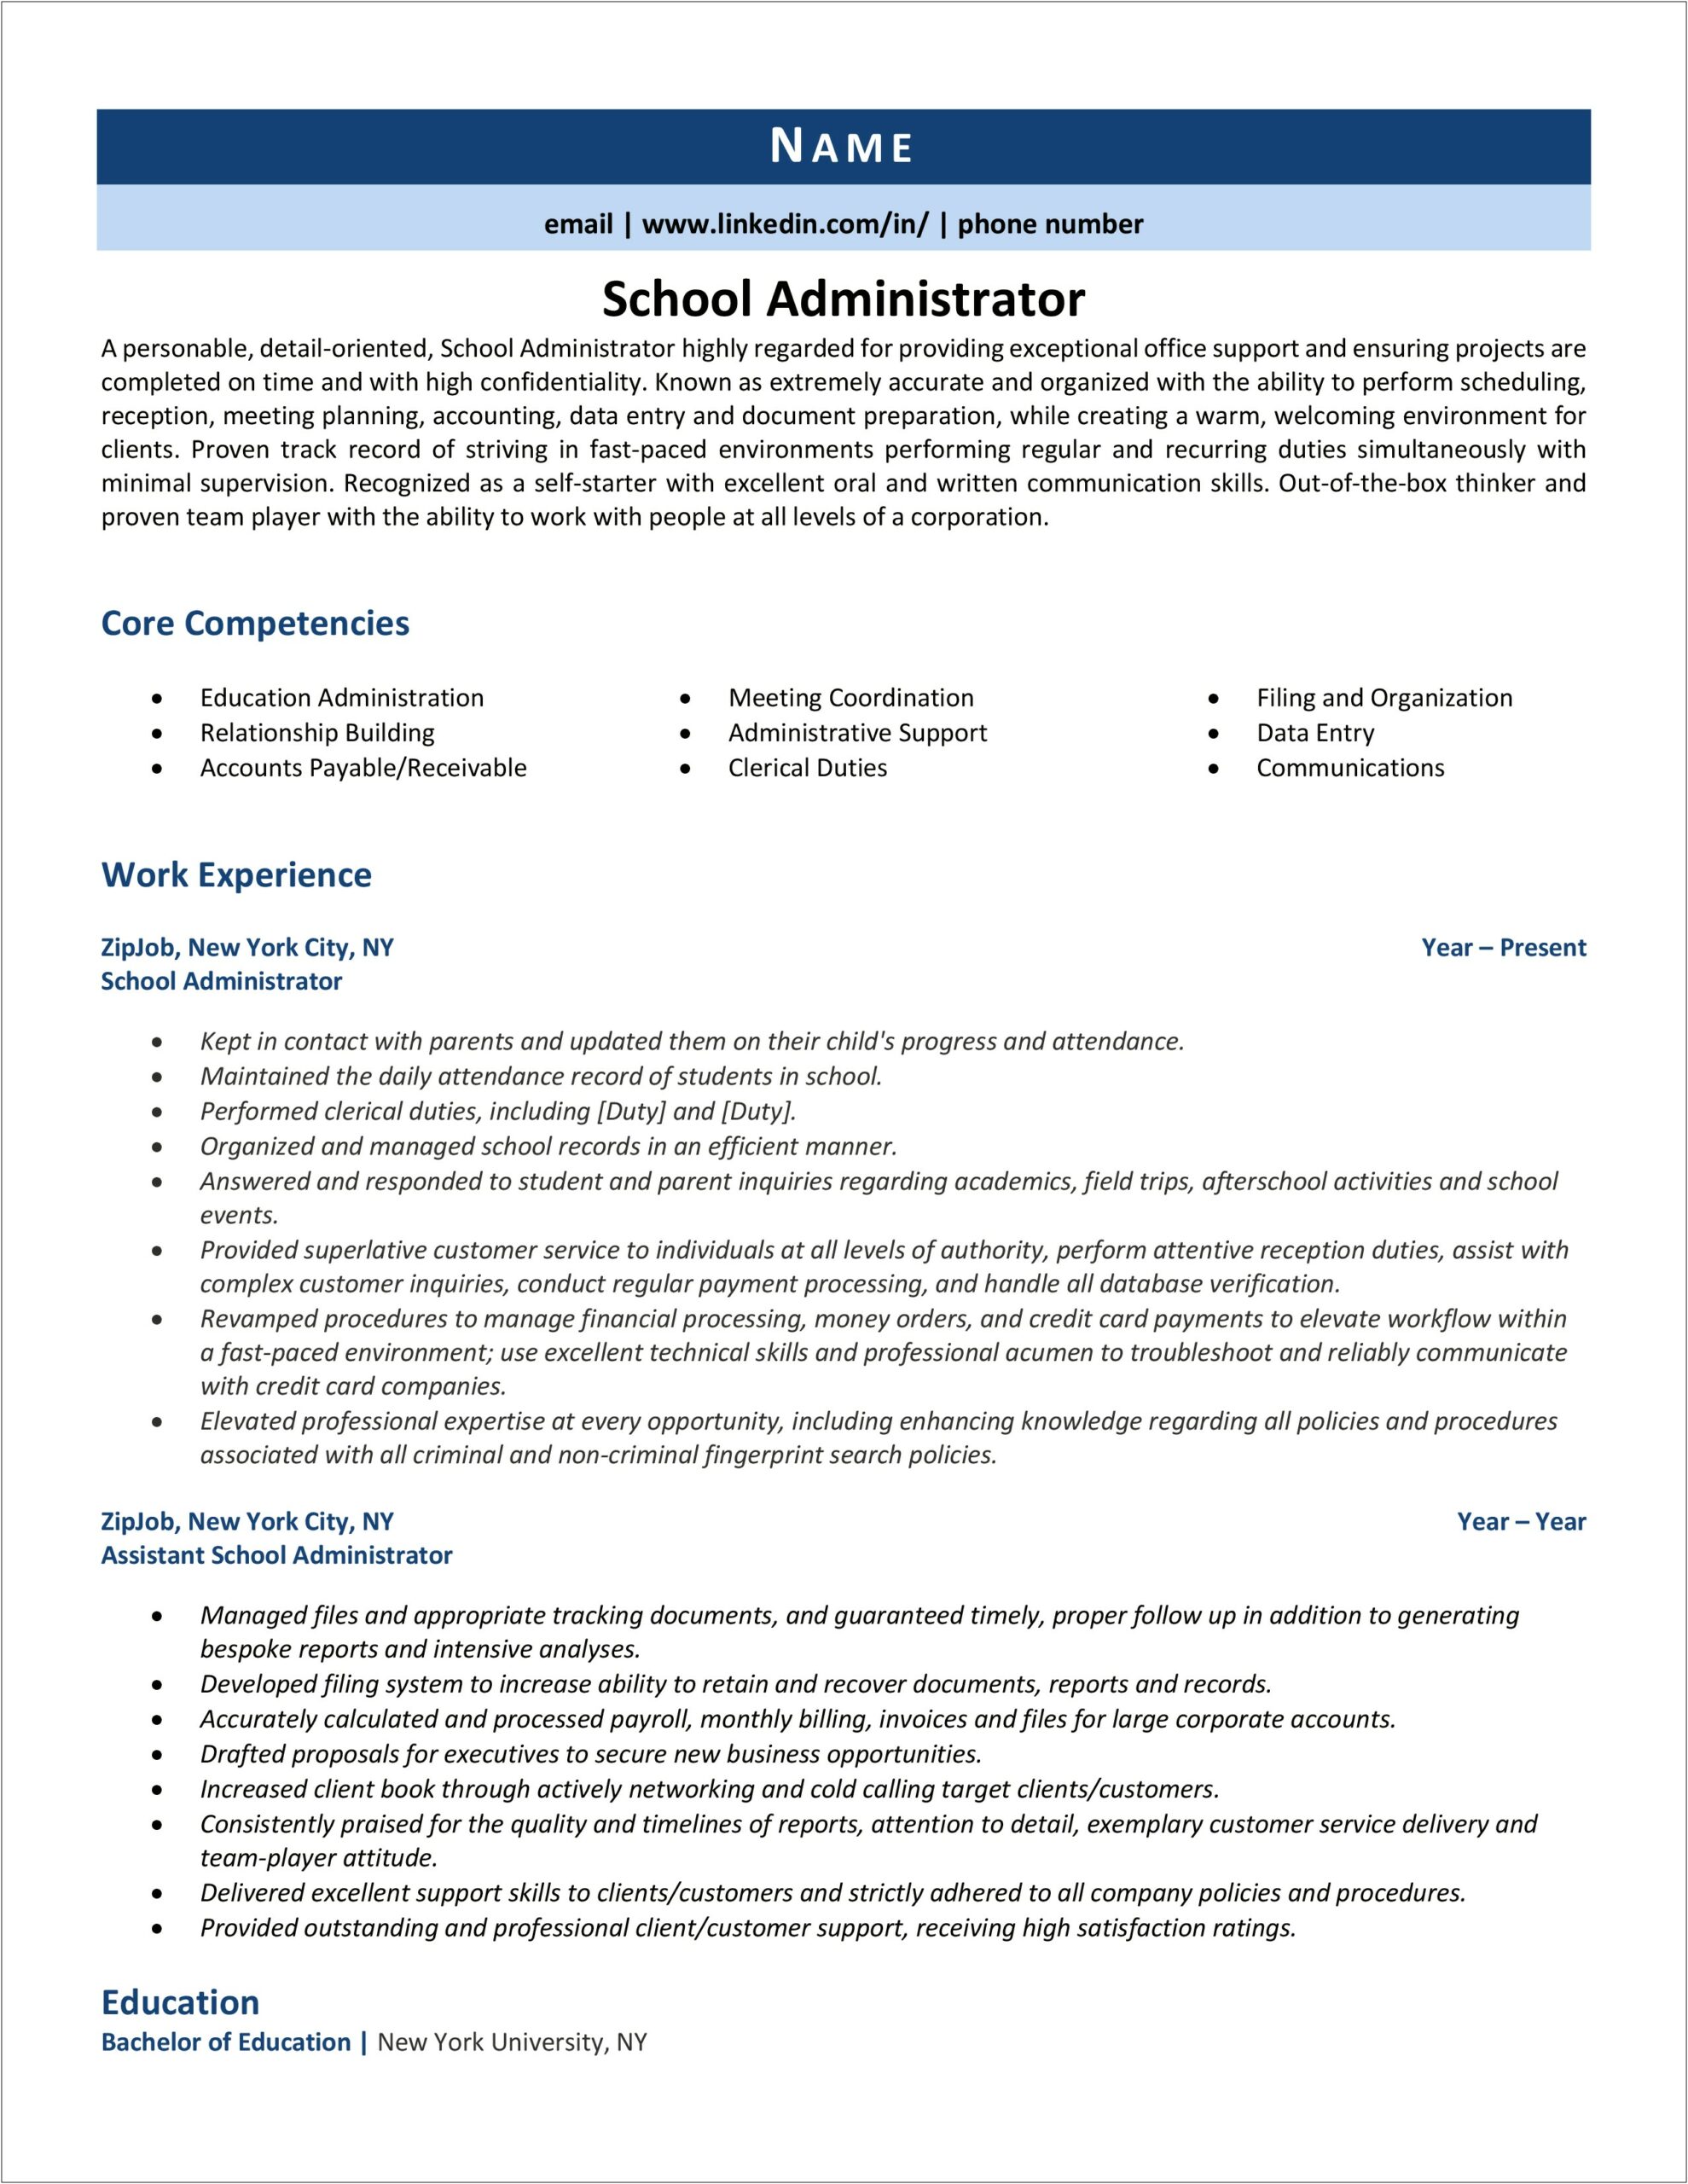 Best Resume Templates For School Administrators